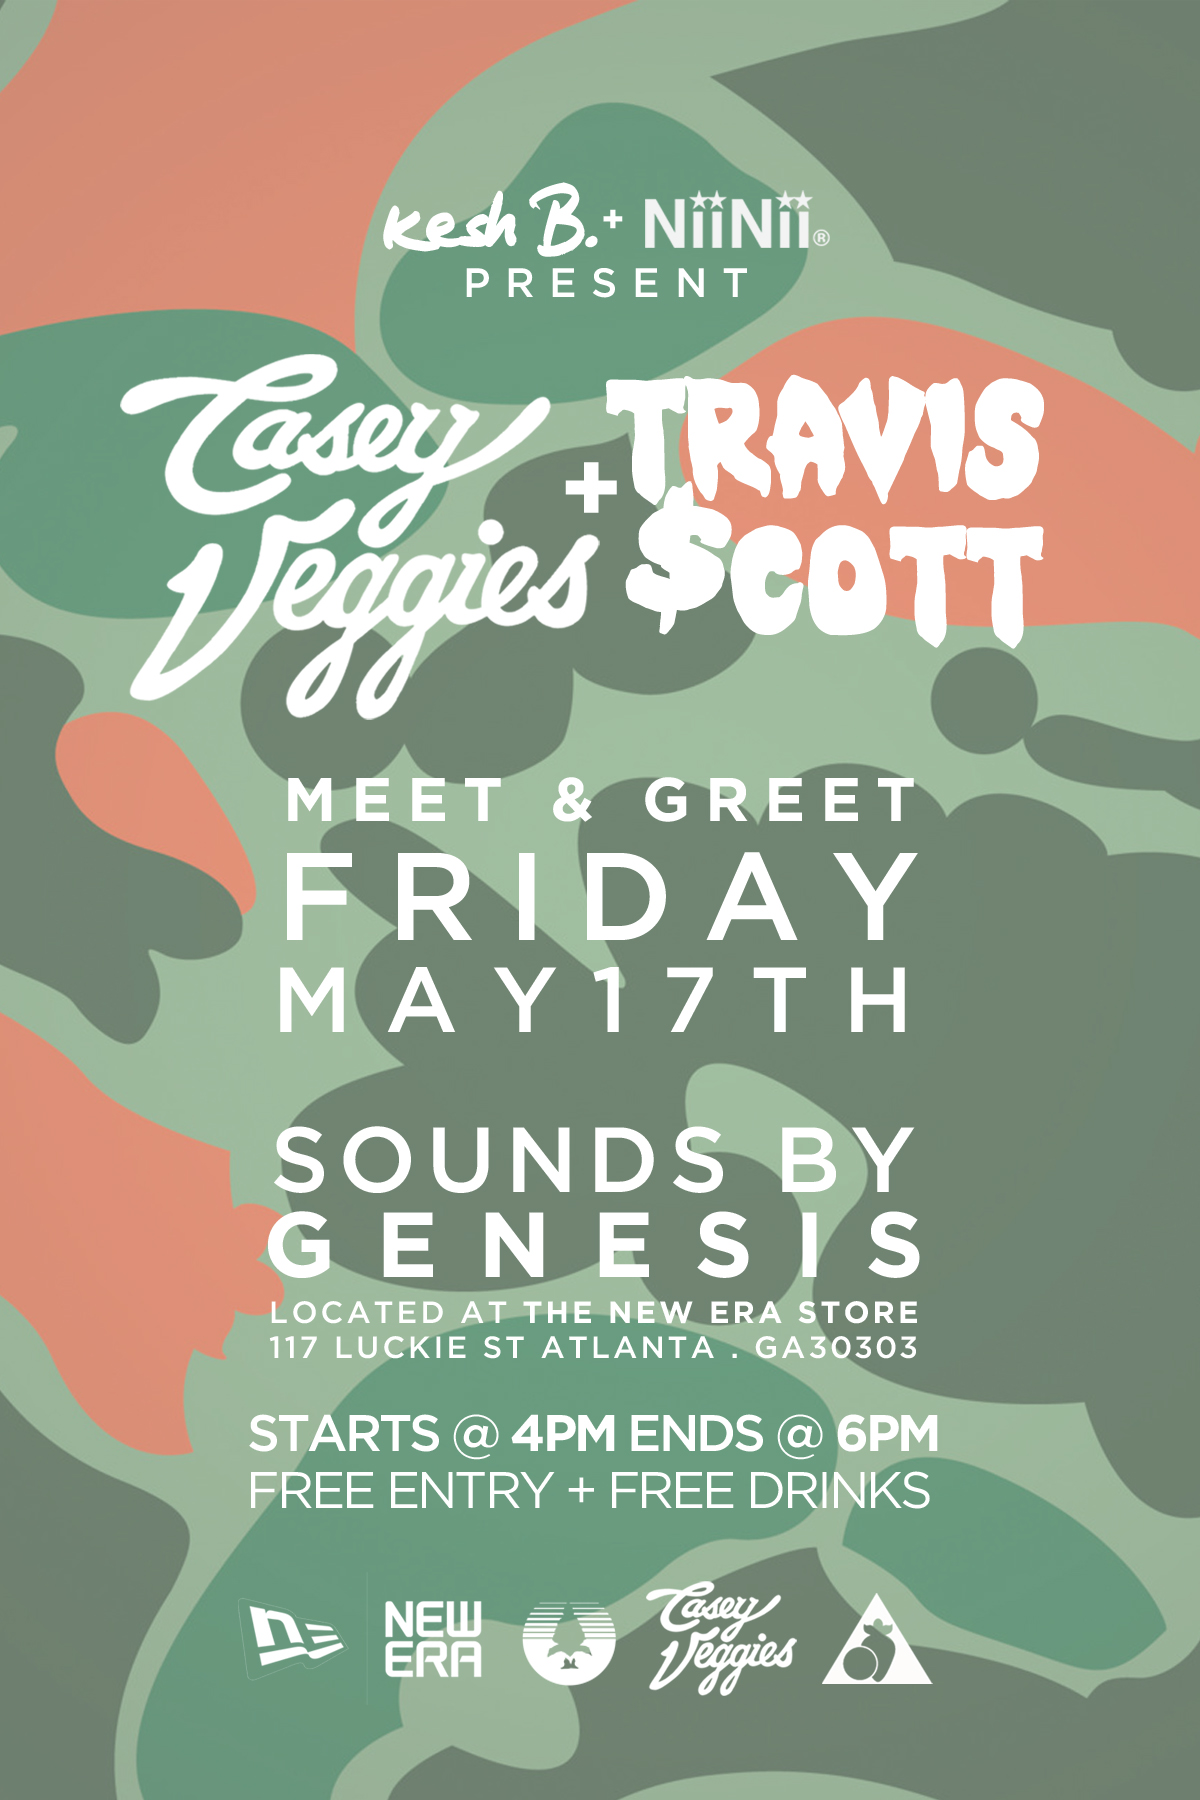 Casey Veggies & Travis Scott Meet & Greet